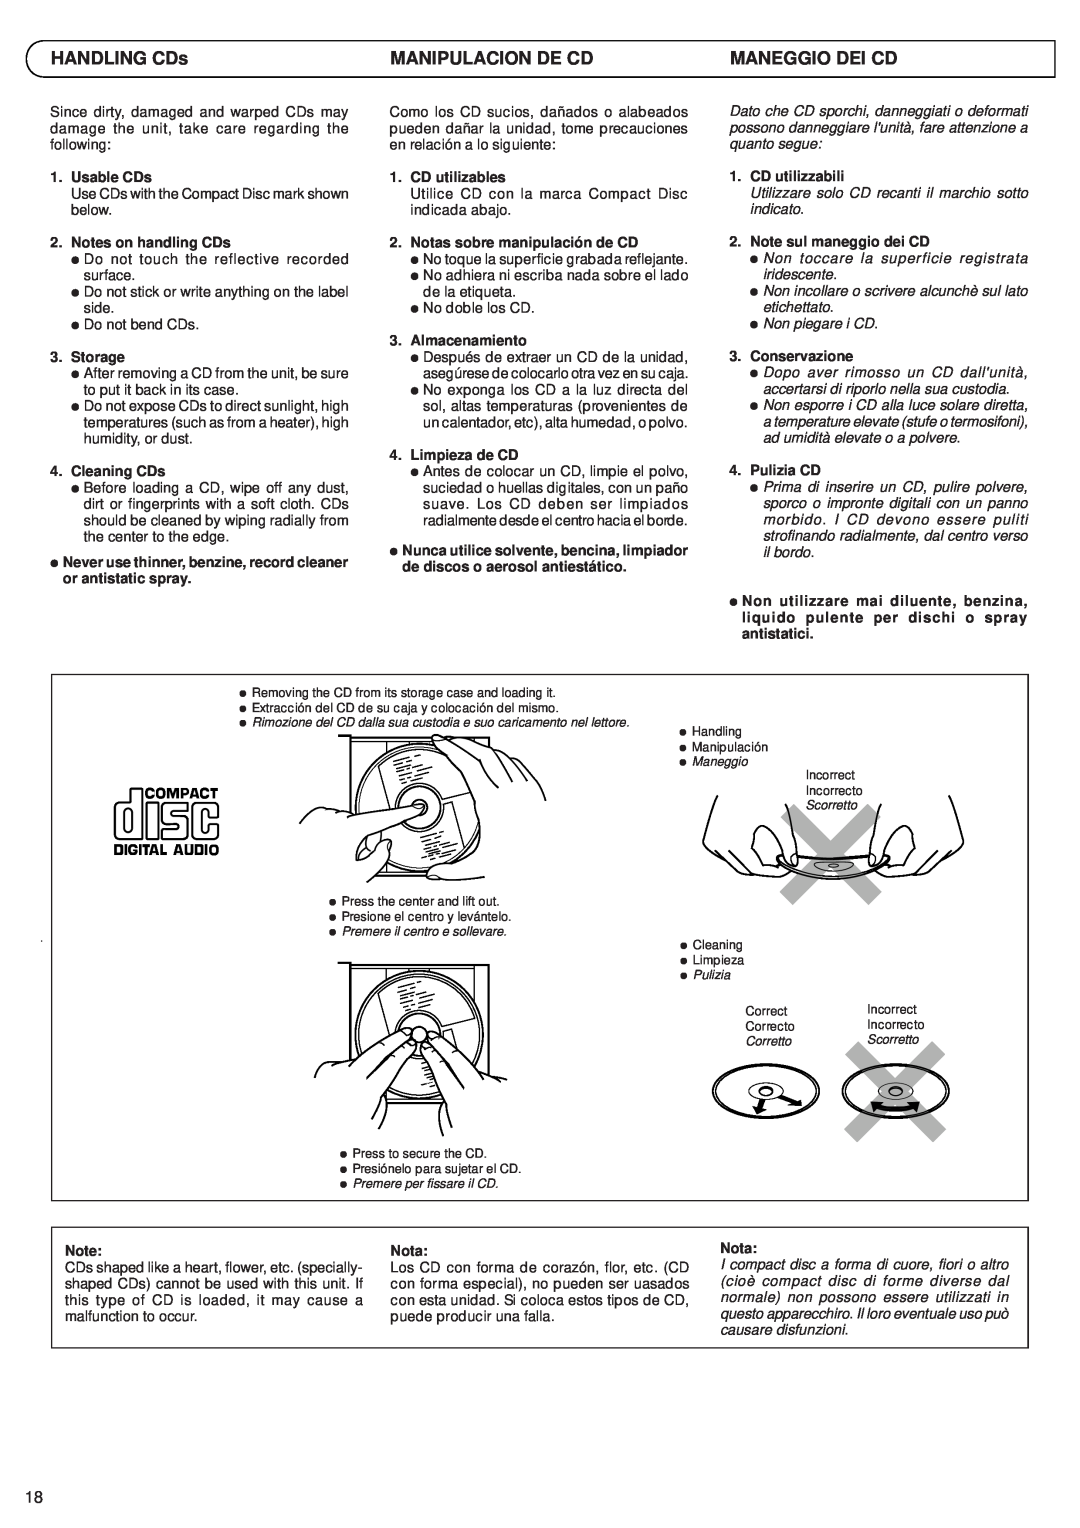 JVC RV-B55 GY/BU/LTD manual HANDLING CDs, Manipulacion De Cd, Maneggio Dei Cd 